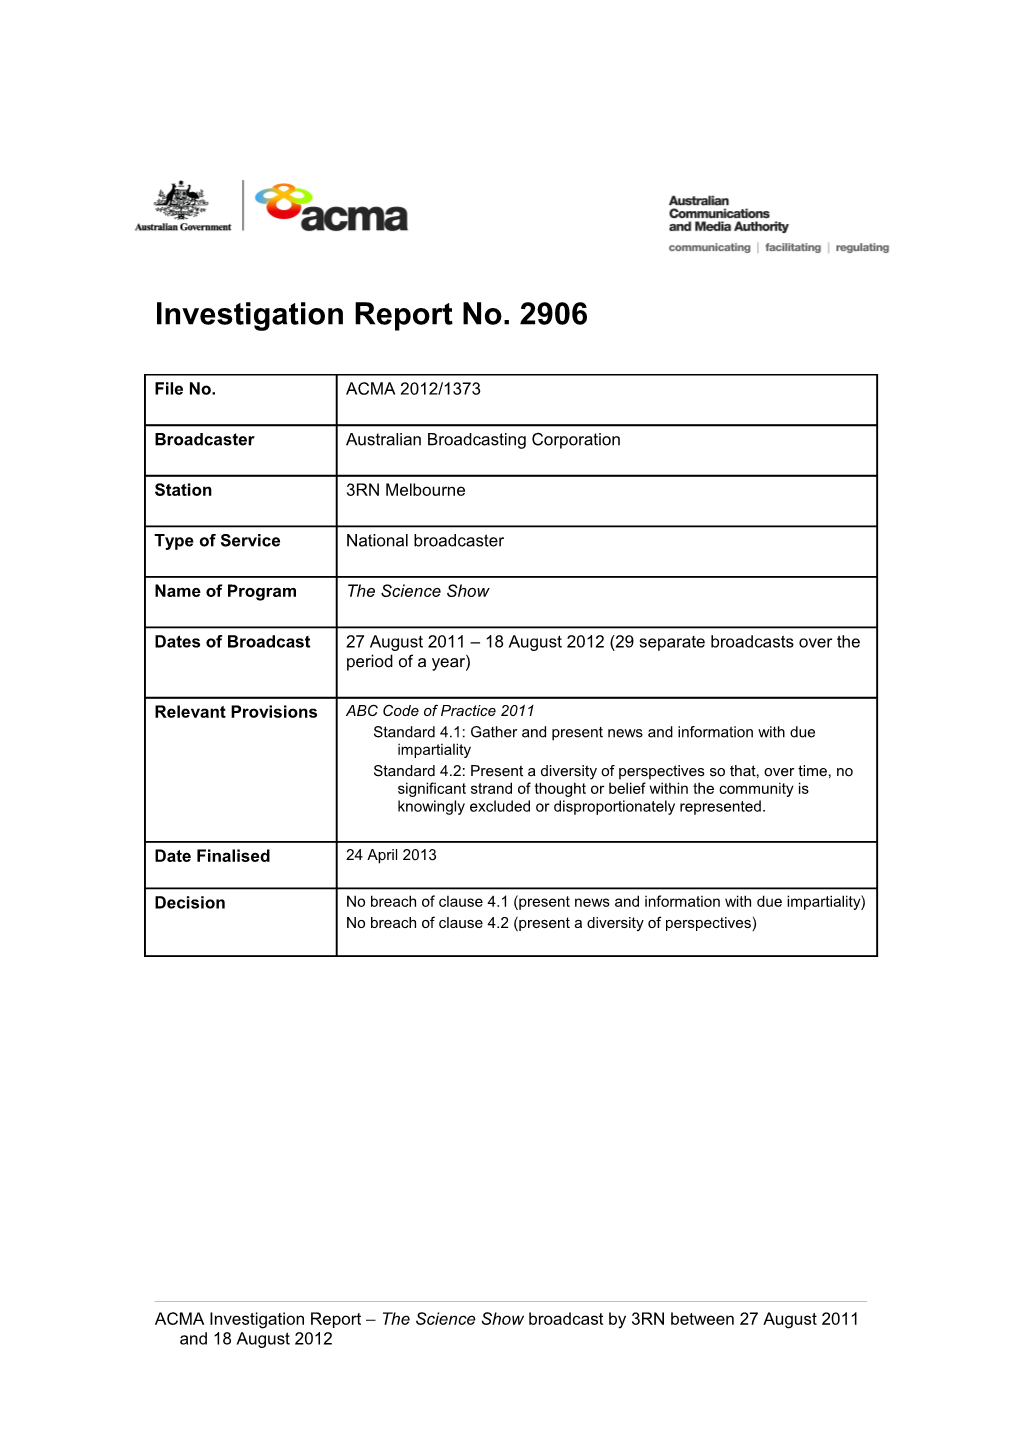 3RN Melbourne - ACMA Investigation Report 2906